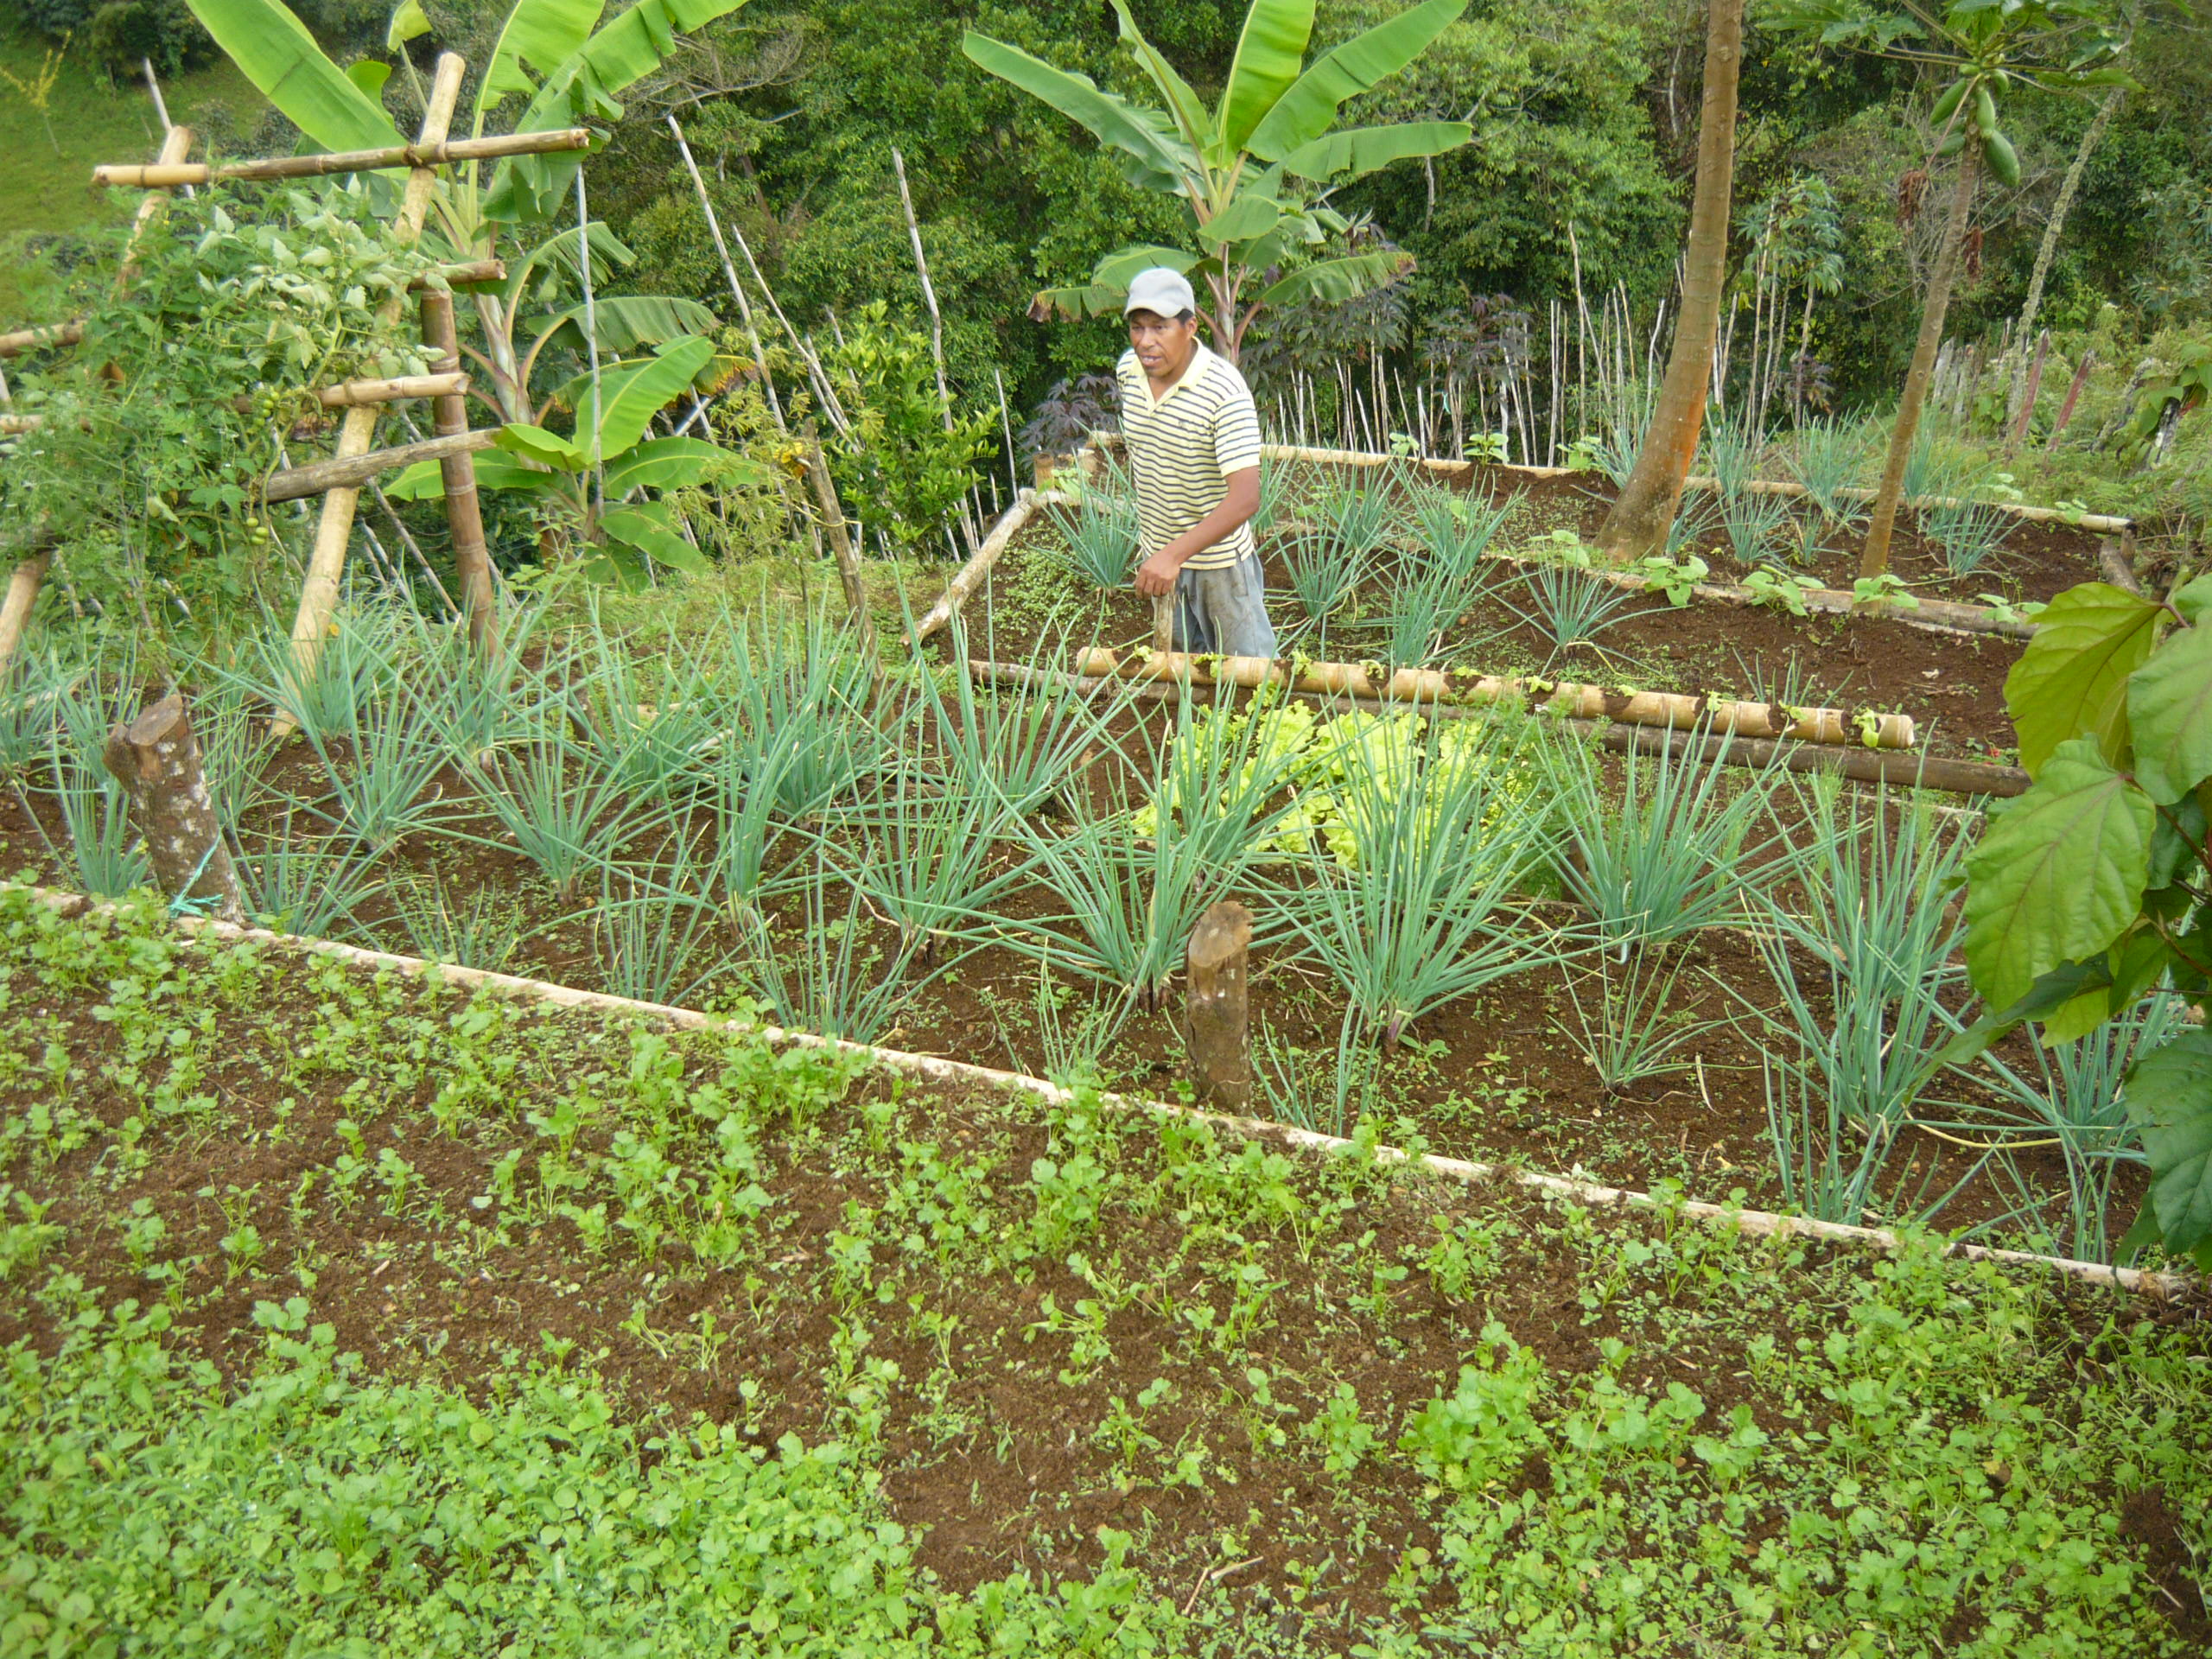 https://www.wfto-la.org/agroecologia-y-comercio-justo-asopecam-colombia/